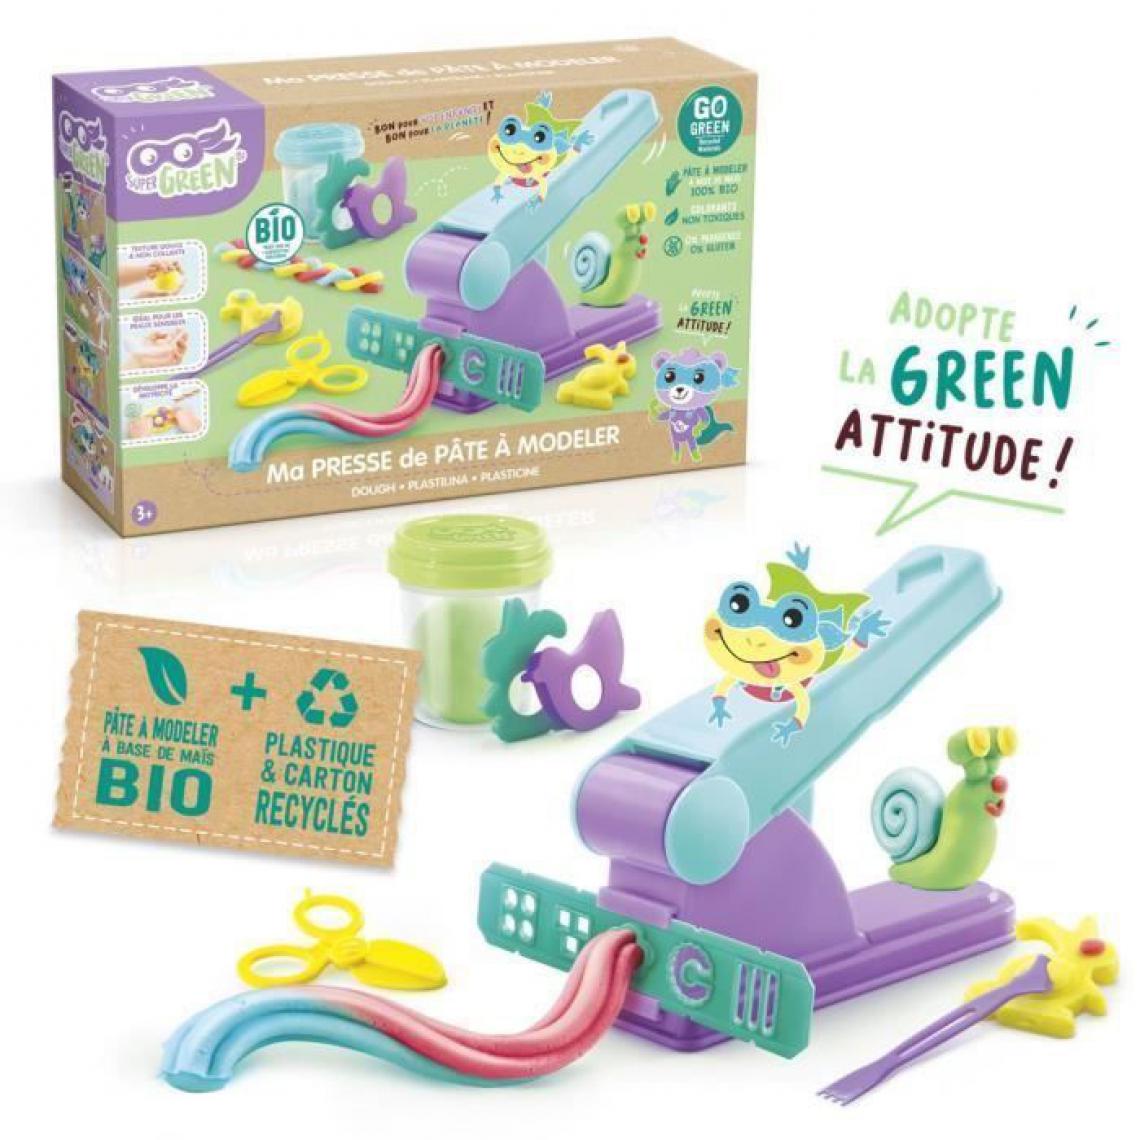 Canal Toys - SUPER GREEN Kit extruder machine a presser de pate a modeler bio - Modelage